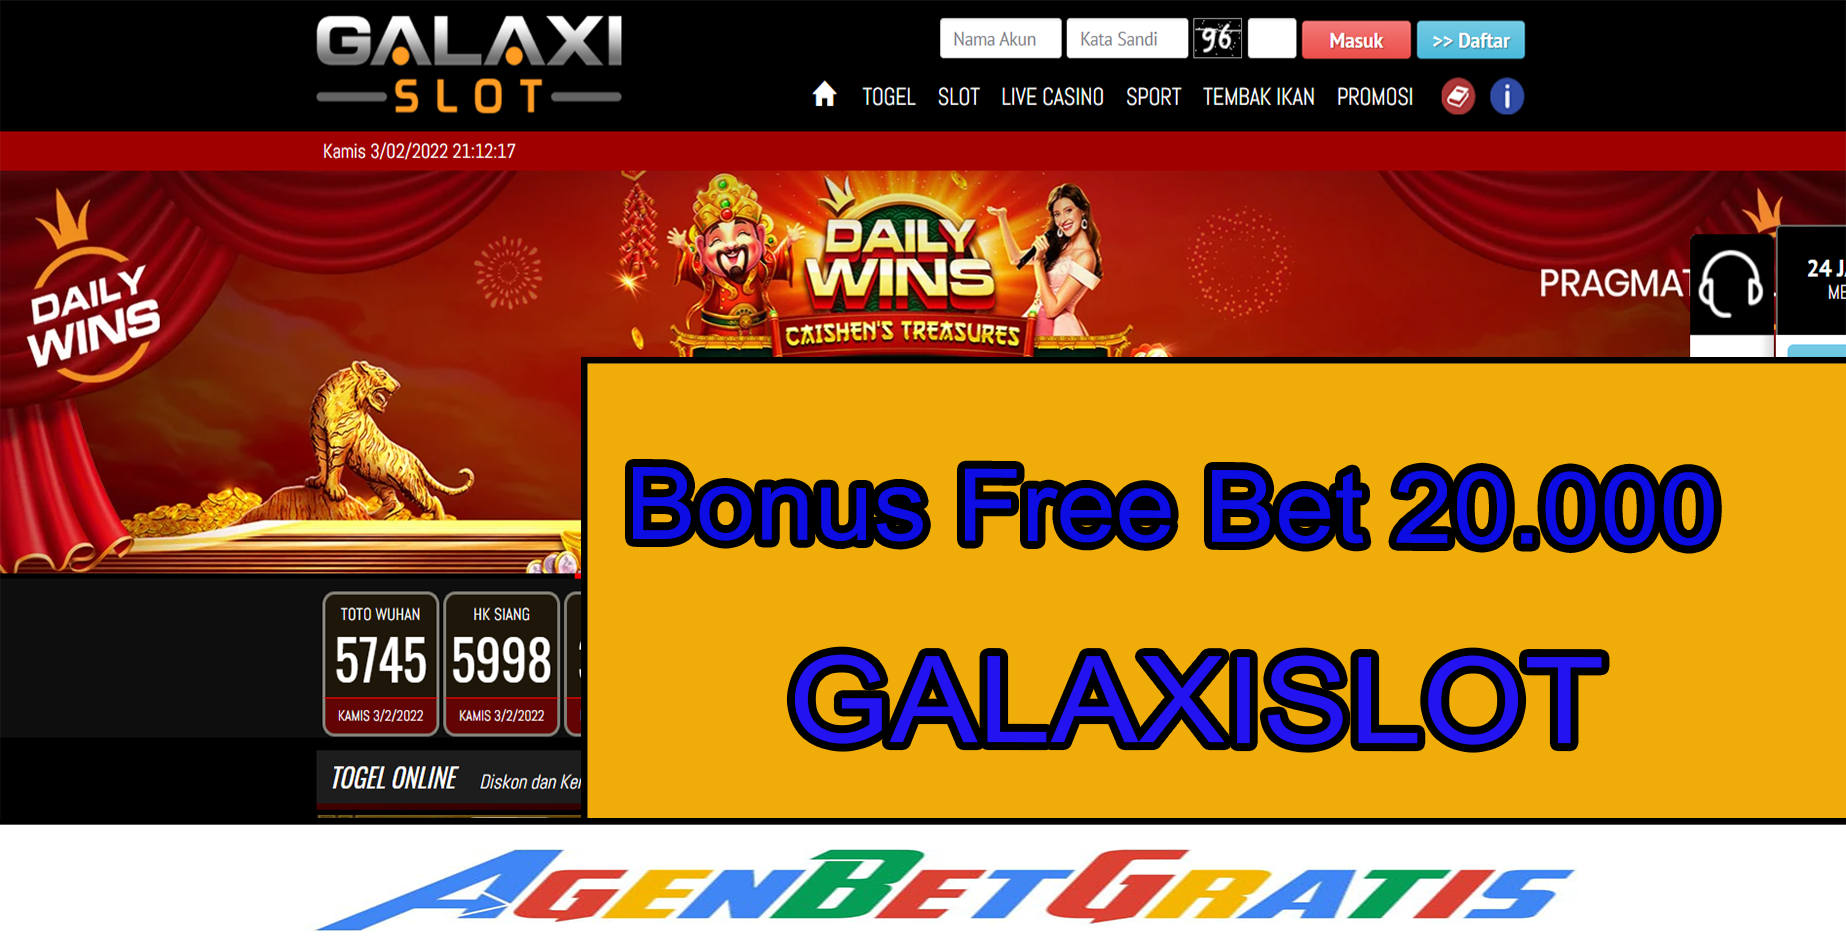 GALAXISLOT - Bonus FreeBet 20.000